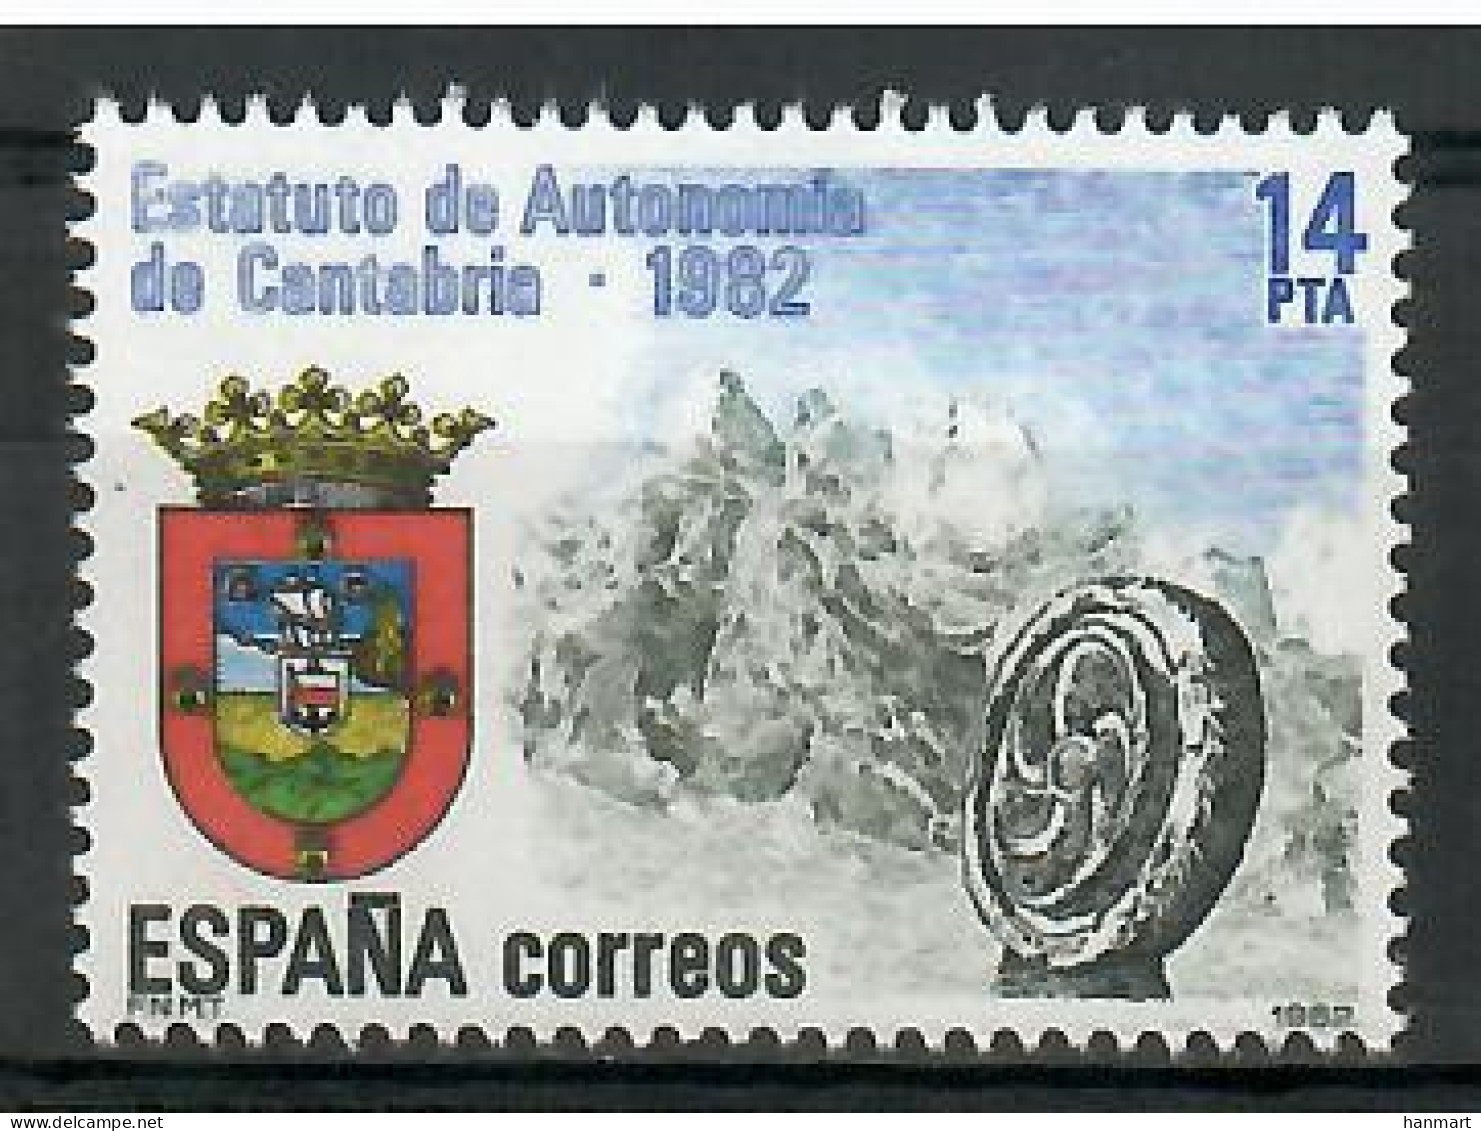 Spain 1983 Mi 2573 MNH  (ZE1 SPN2573) - Stamps